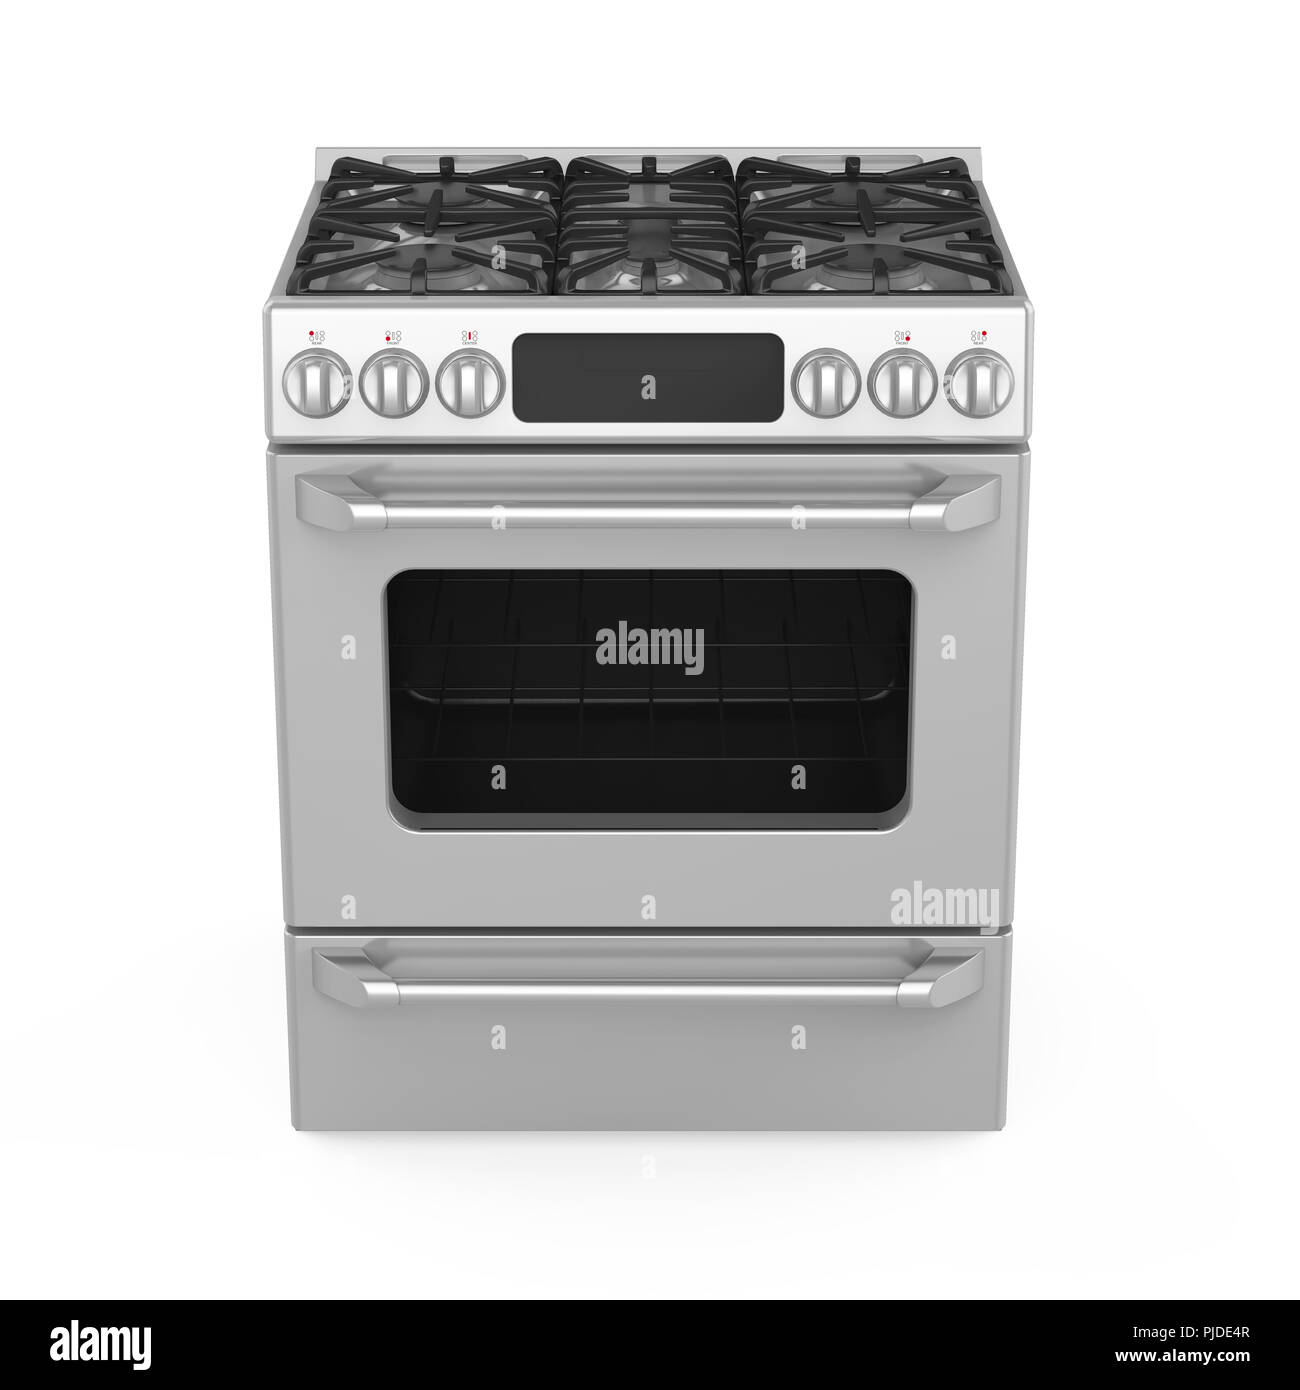 https://c8.alamy.com/comp/PJDE4R/kitchen-electric-stove-isolated-PJDE4R.jpg